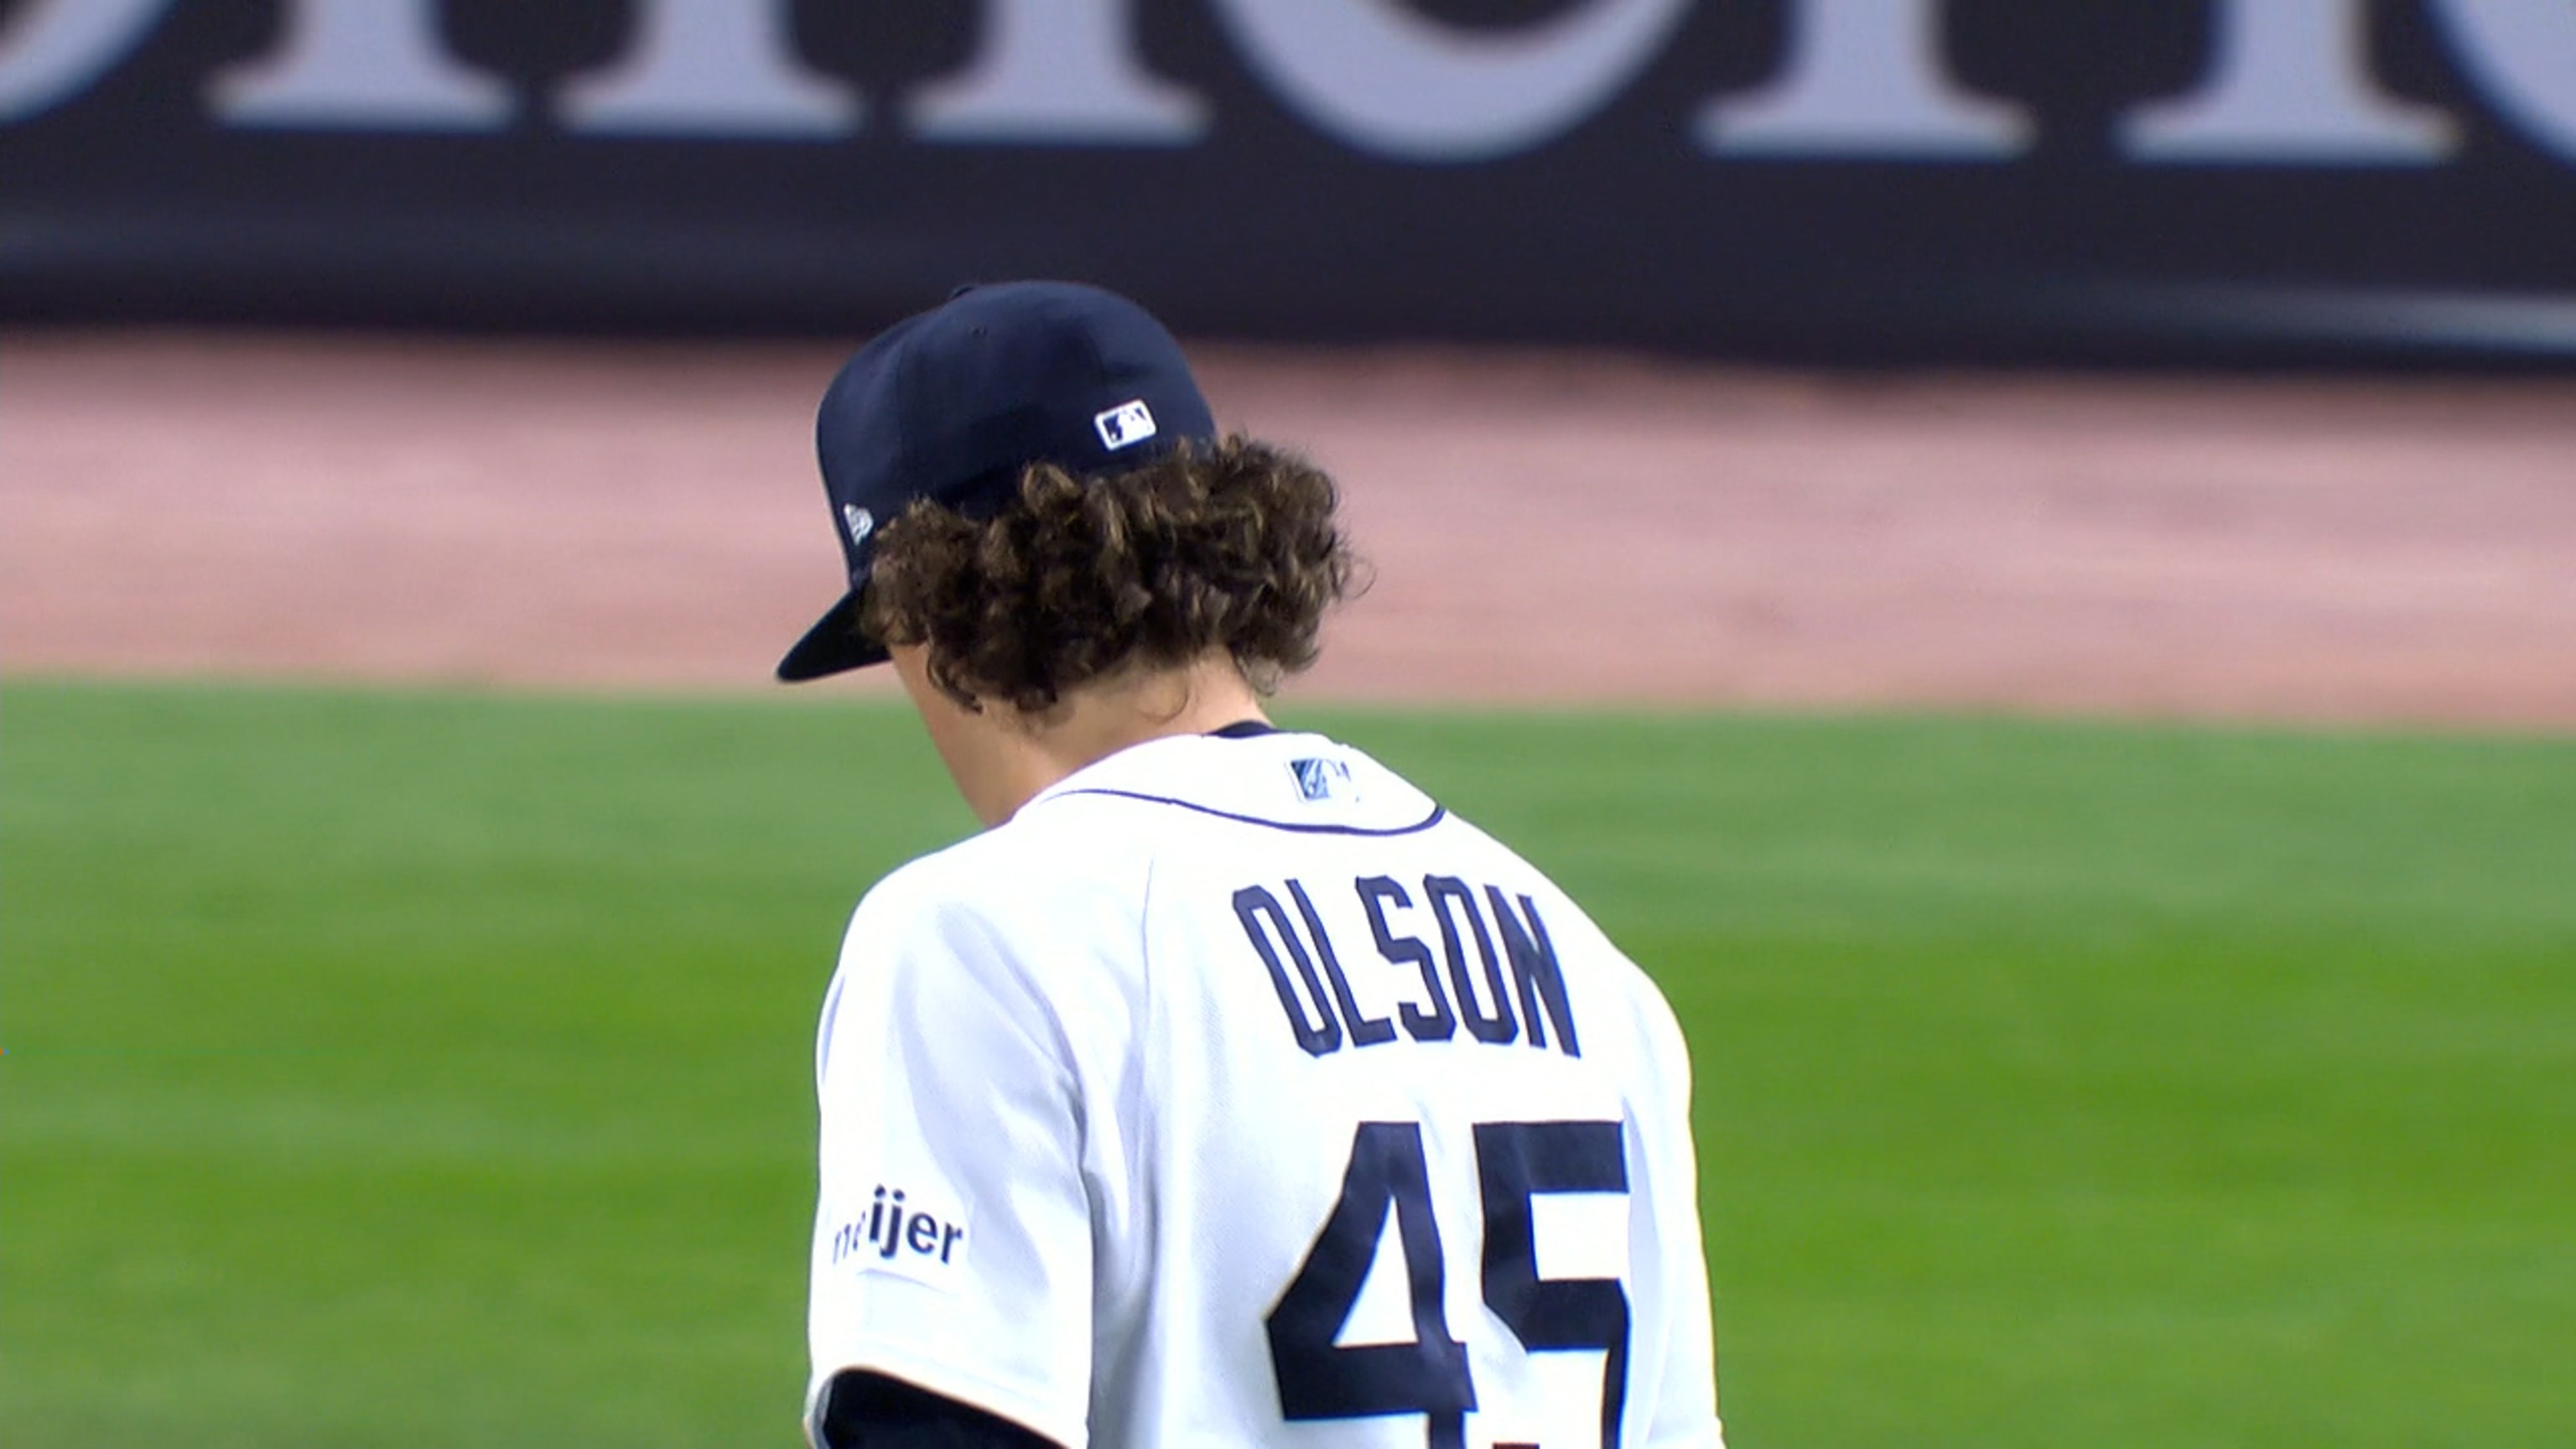 Reese Olson MLB debut includes no-hitter bid